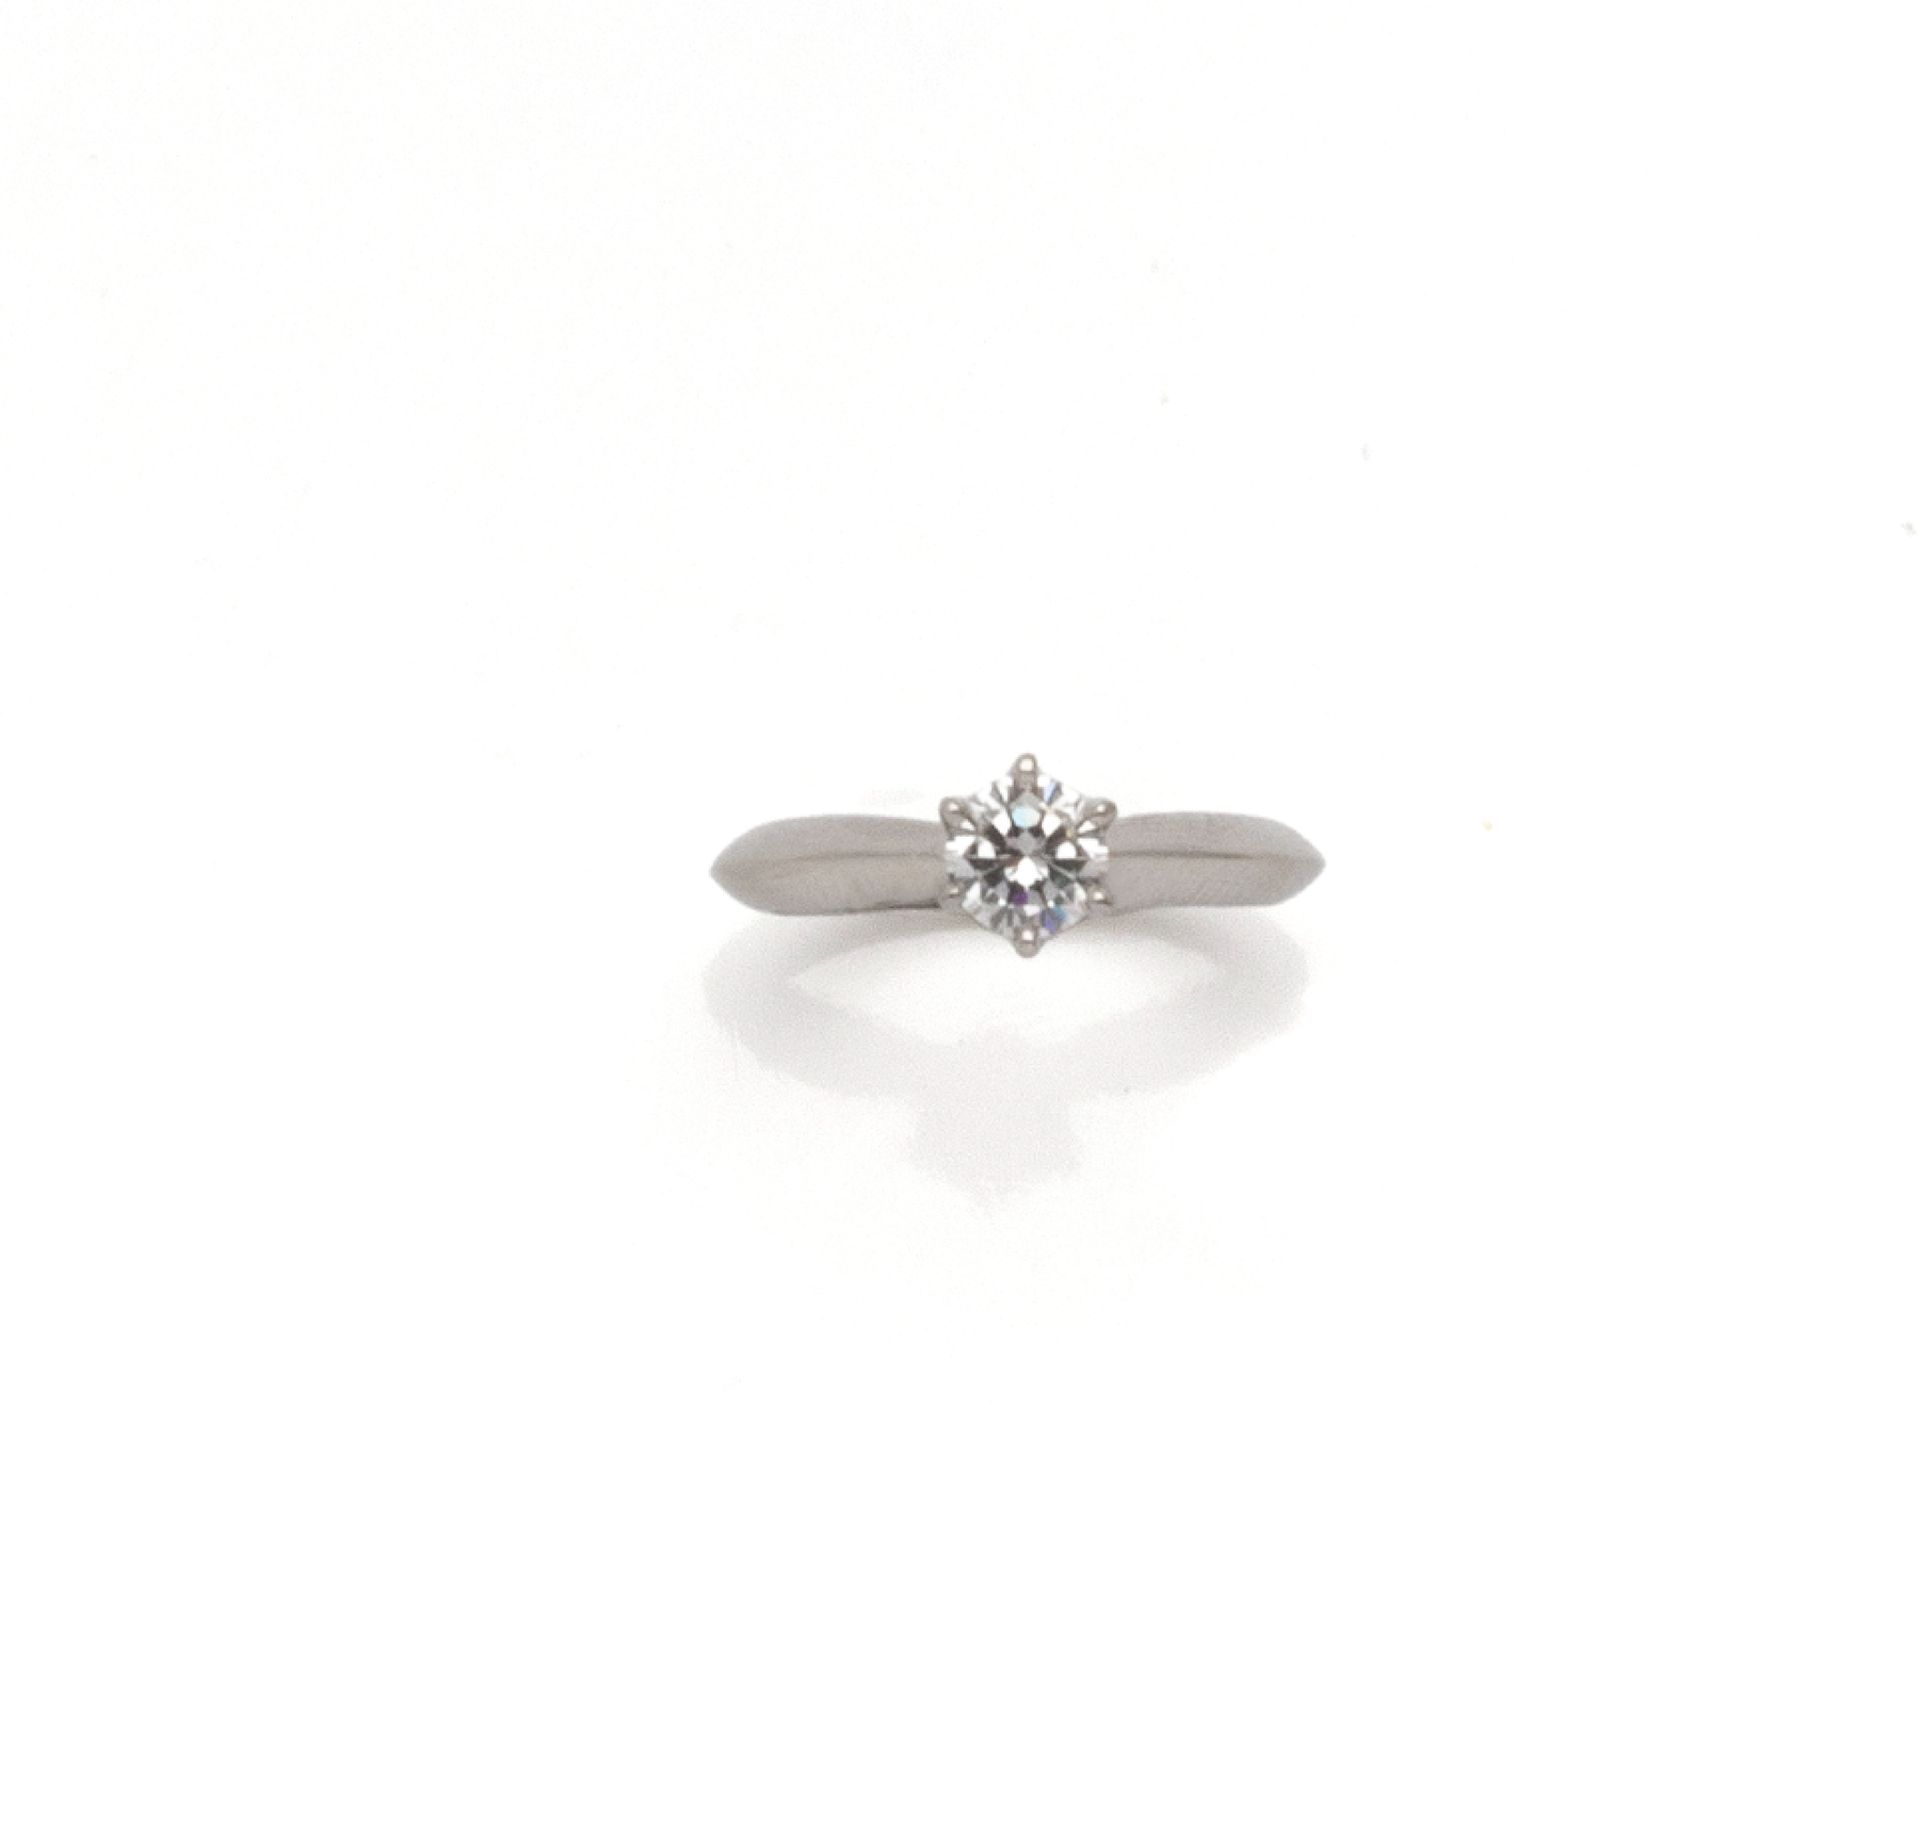 Null 铂金(950/1000)单颗钻石，爪式镶嵌0.51克拉，G，VS2的明亮型切割钻石。

法国的工作。标志：Sté--有五个分支的星星--...

手指&hellip;